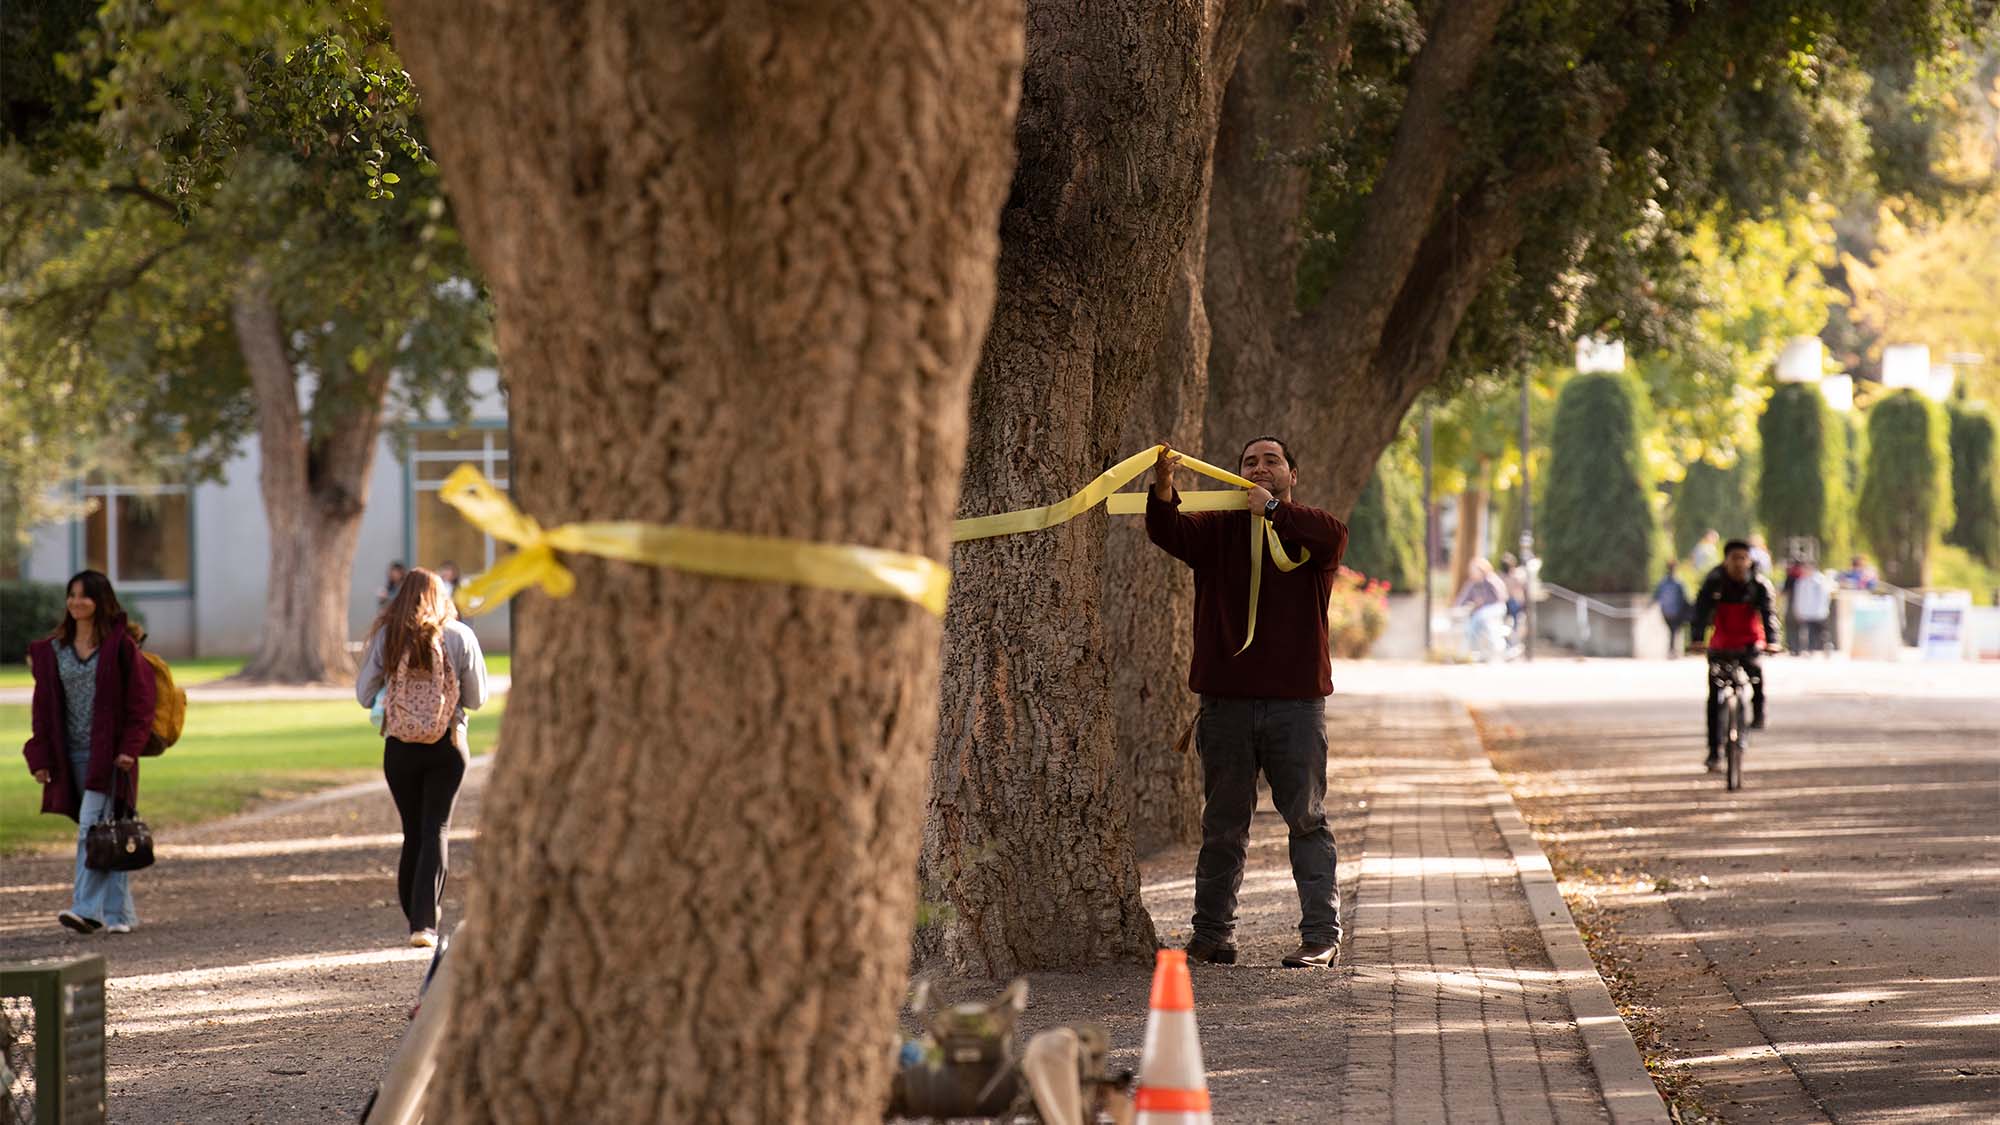 Man ties yellow ribbons on trees.